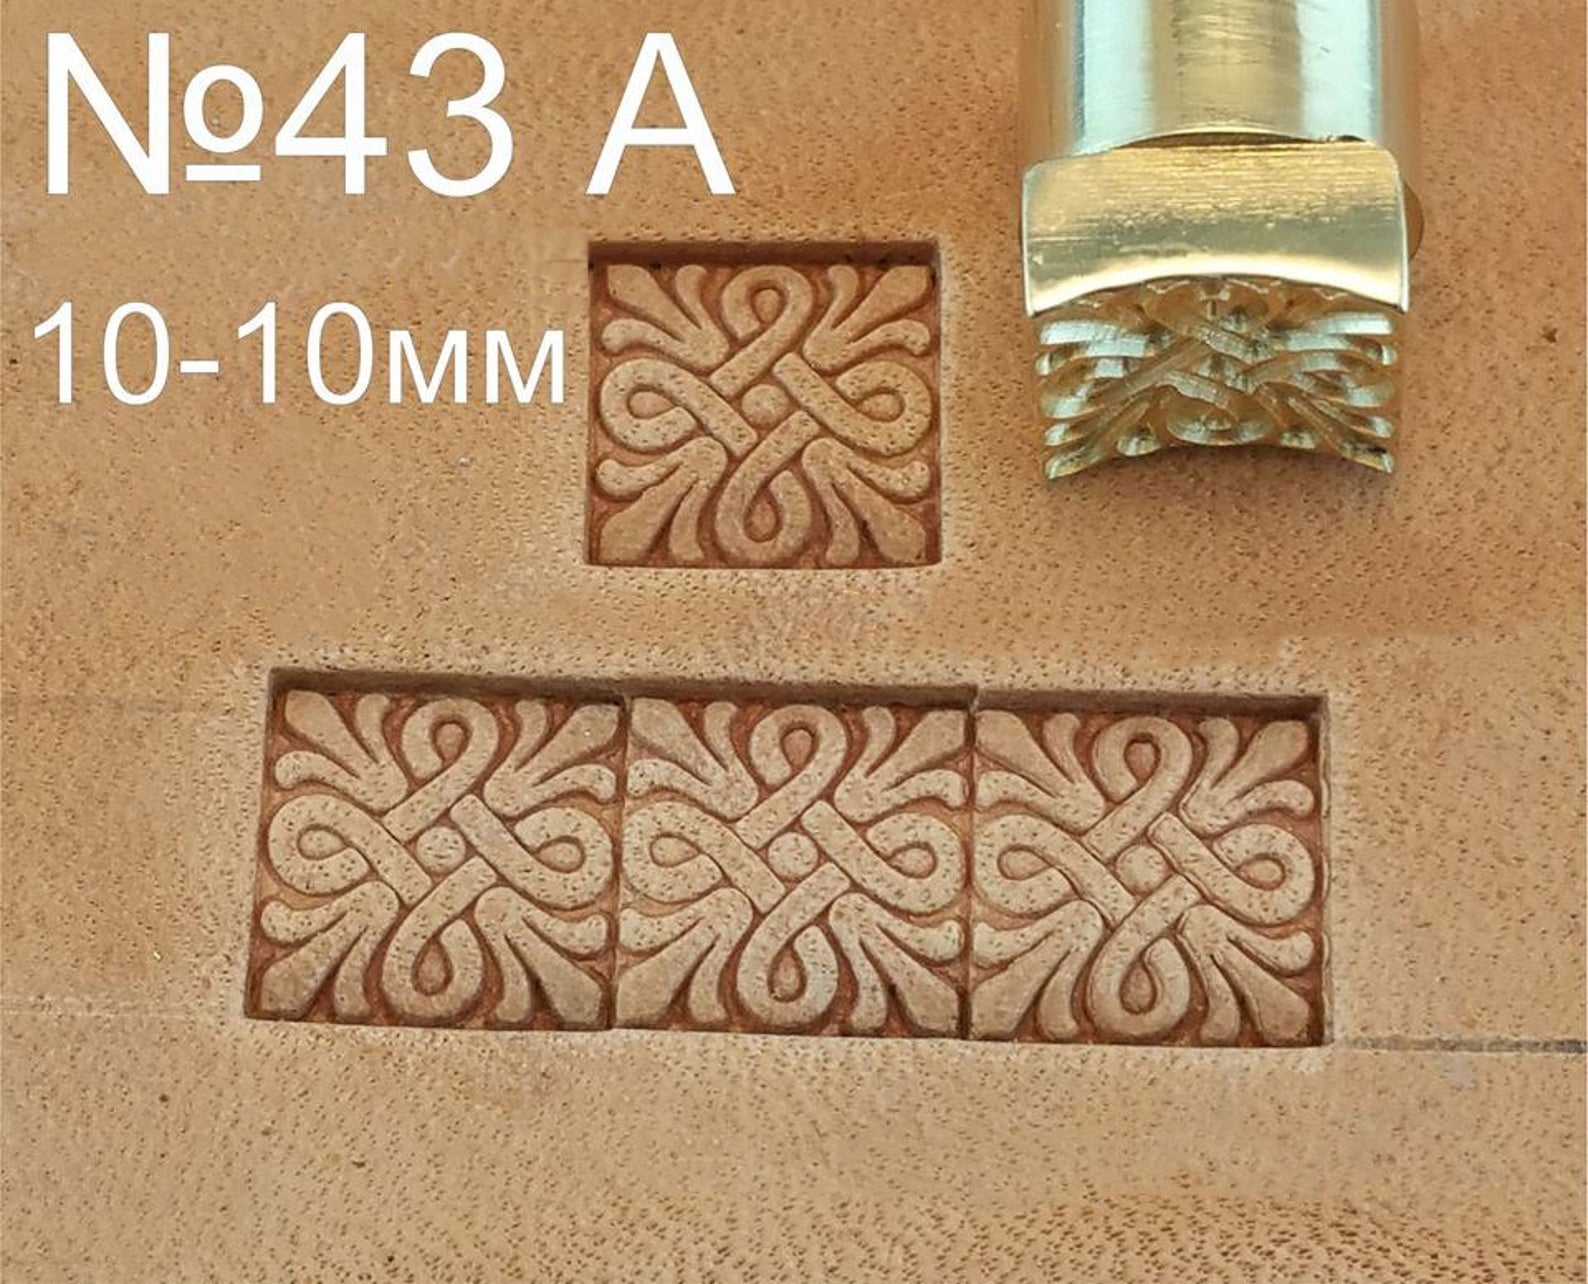 Leather stamp tool #43A - SpasGoranov